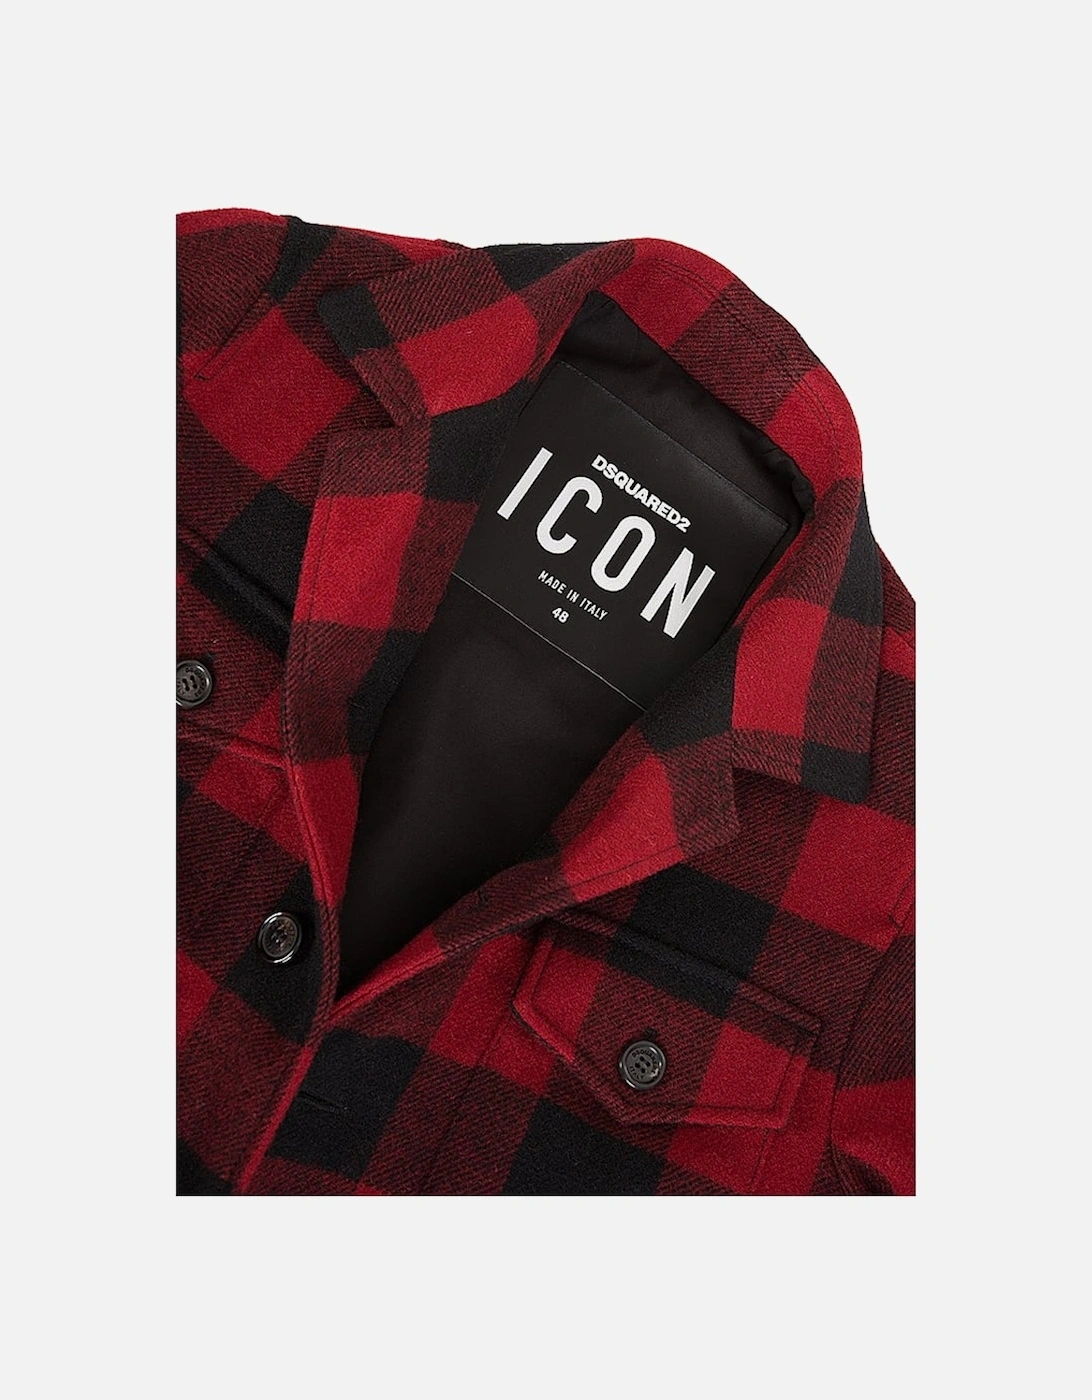 ICON Lumberjack Coat